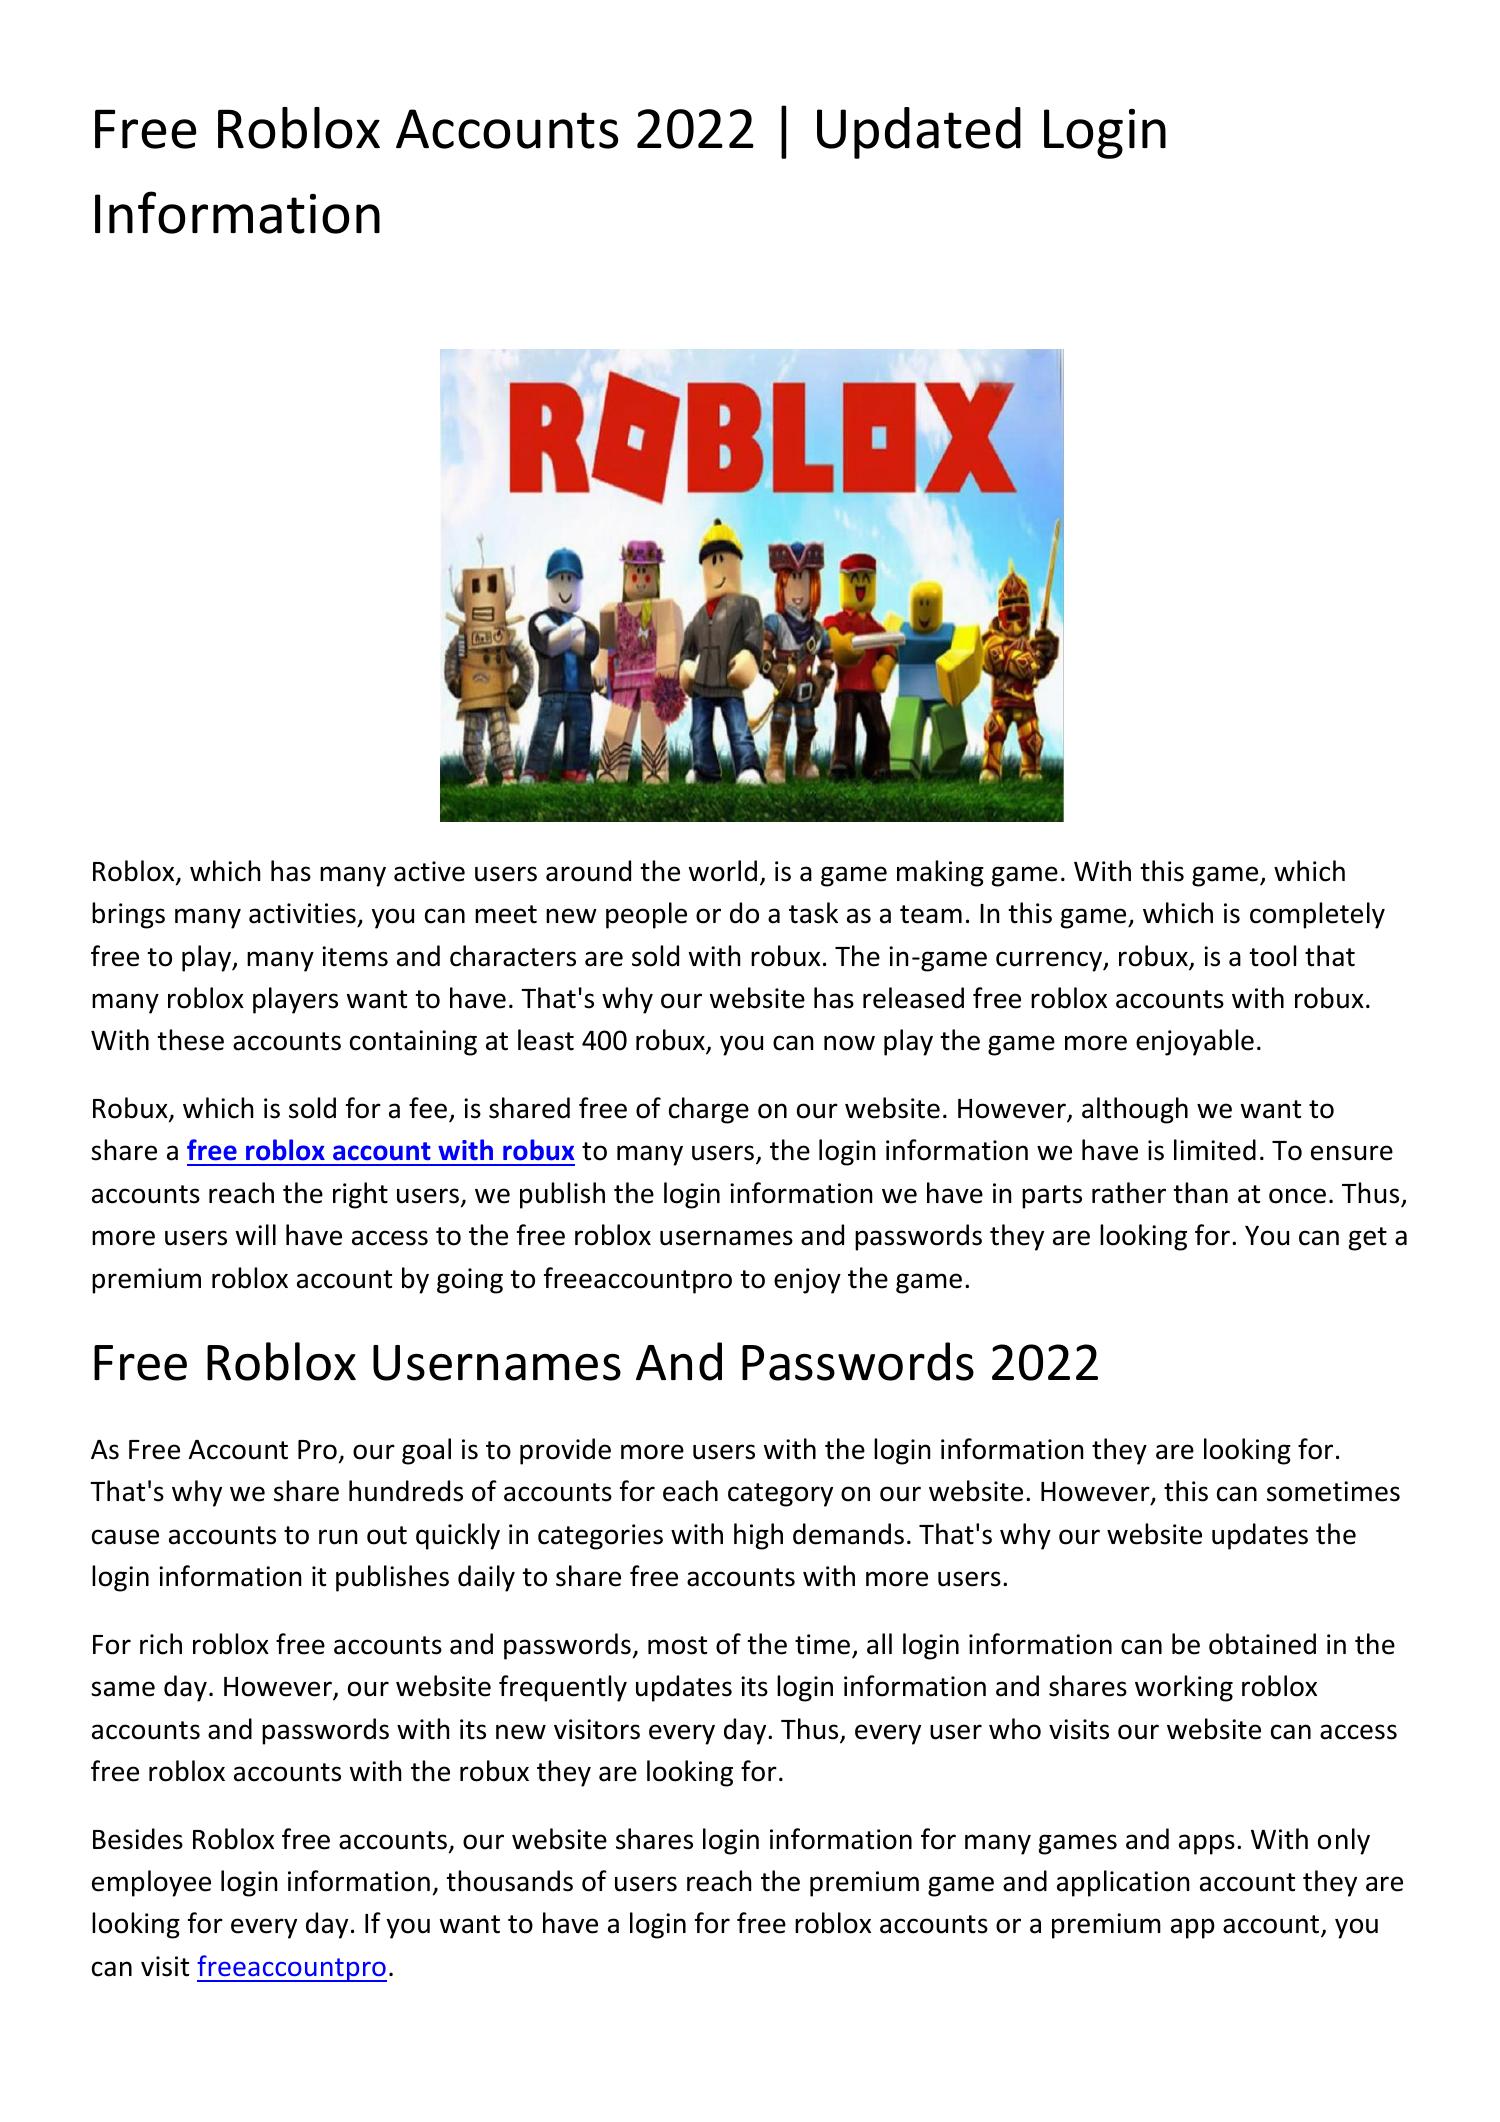 Roblox Free account